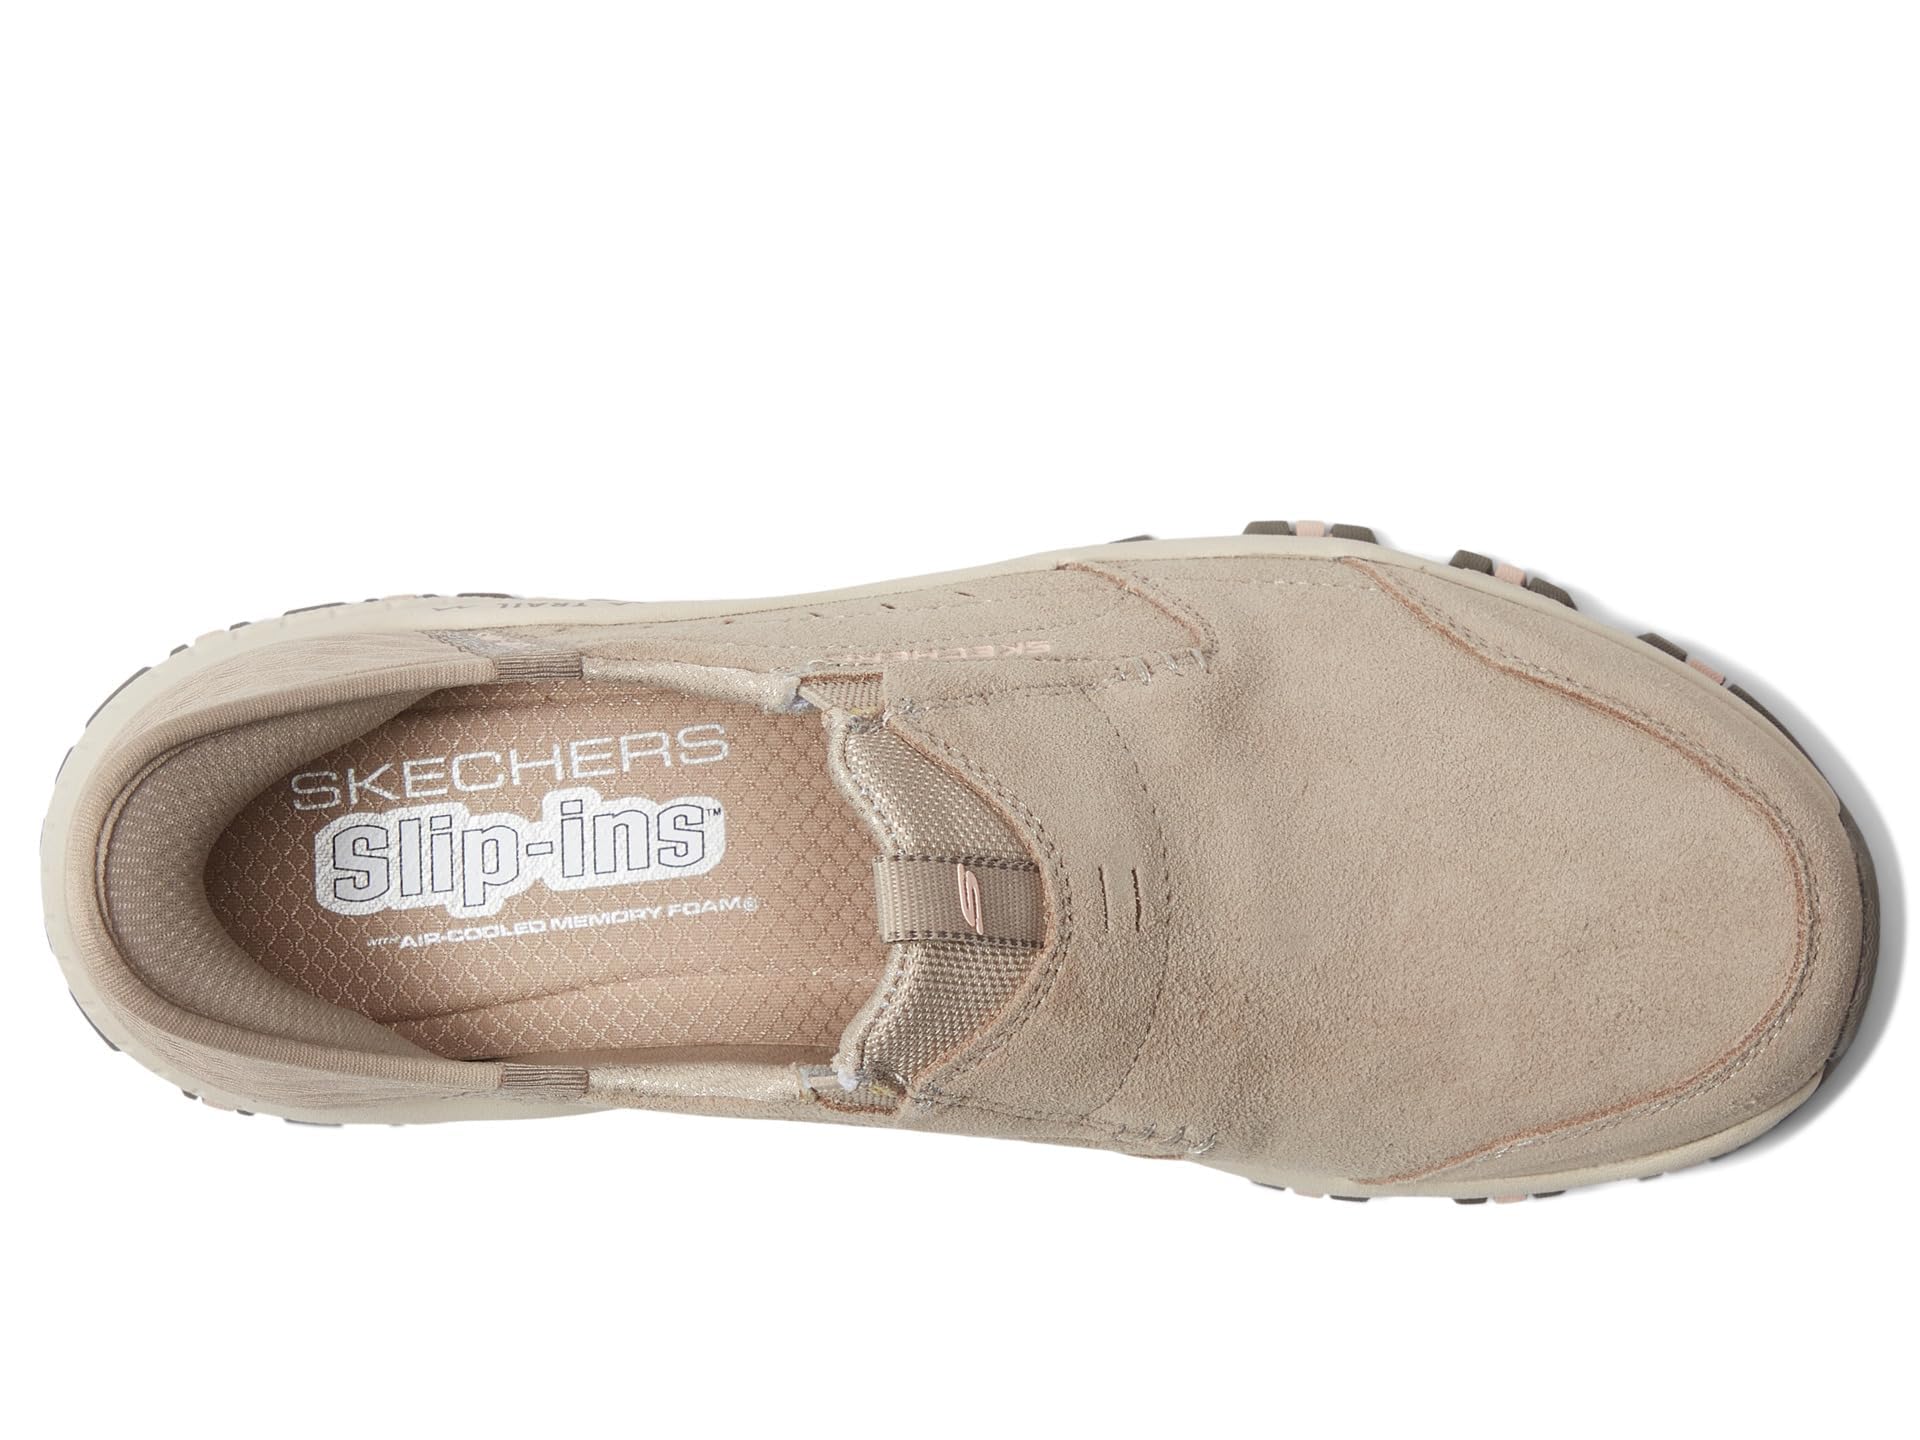 Skechers Women's Hands Free Slip-Ins Hillcrest-Sunapee Sneaker, Taupe, 9.5